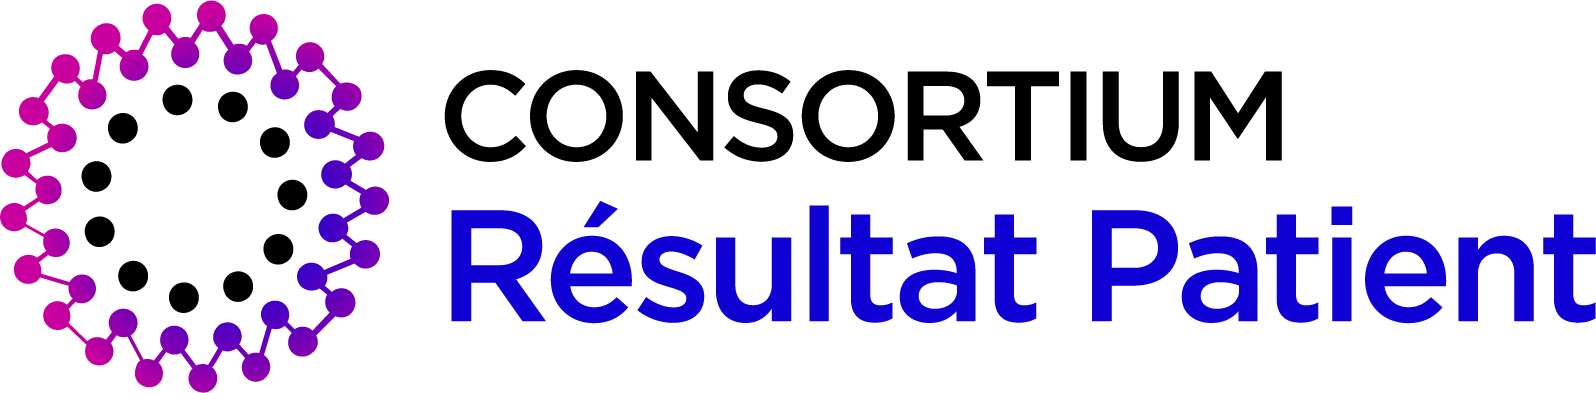 logo consortium résultat patient